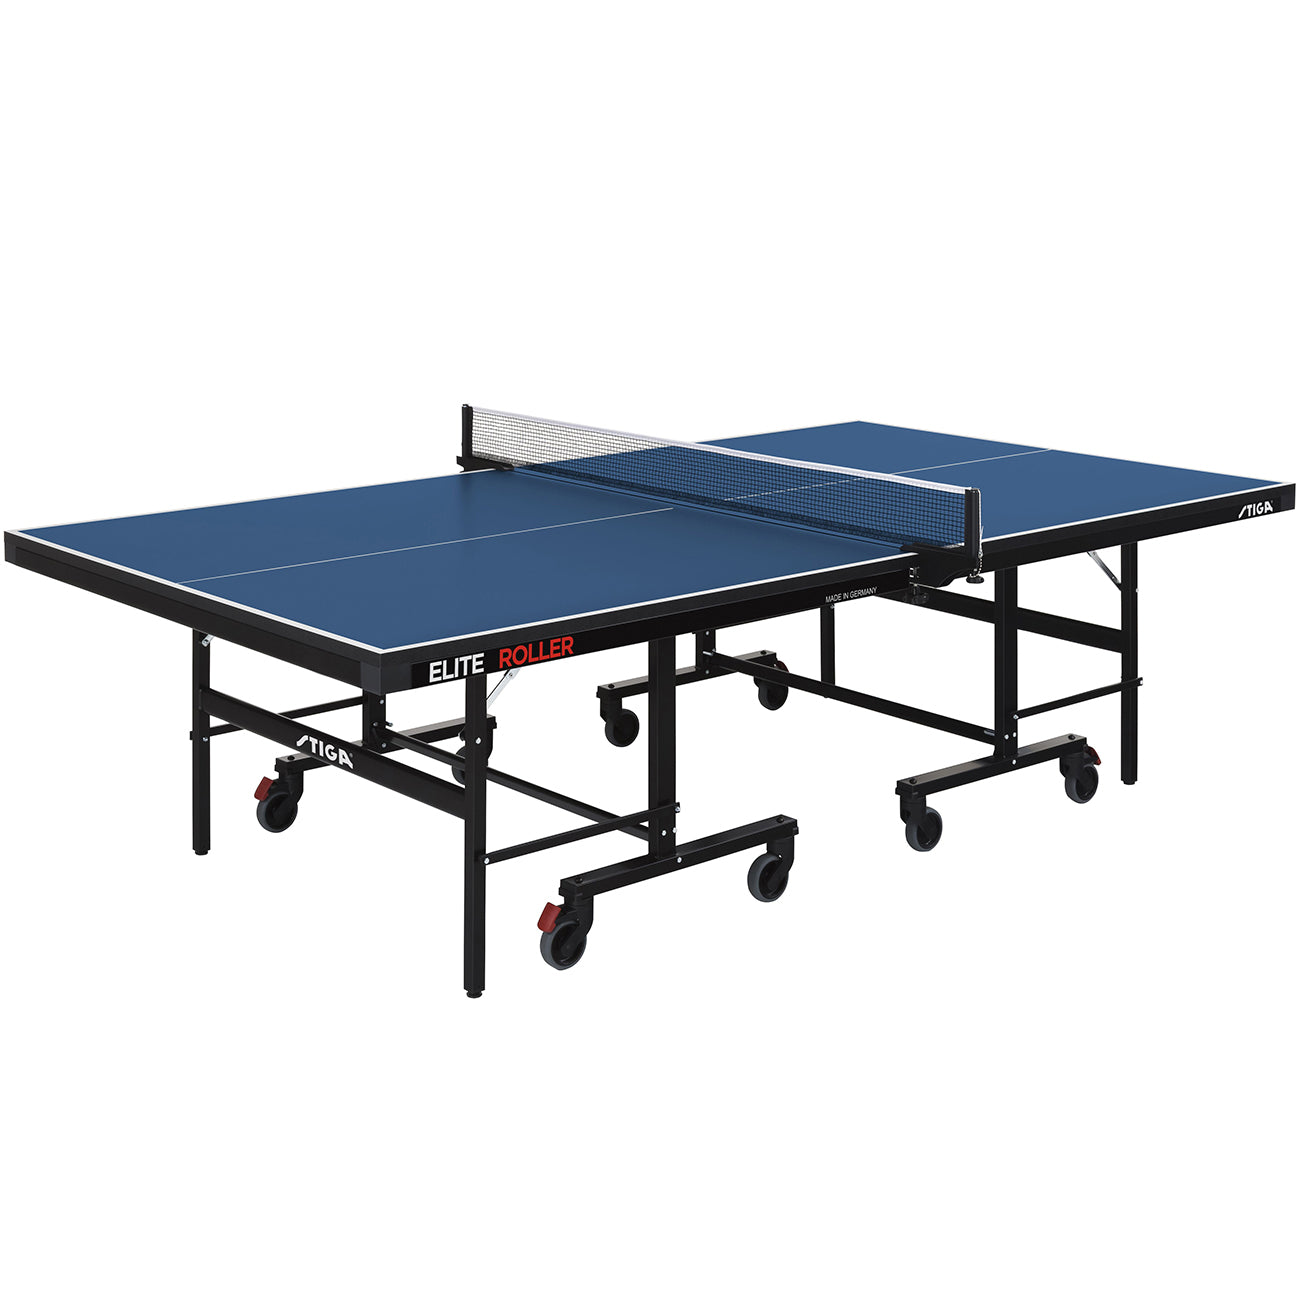 Stiga Elite Roller CSS Indoor Table Tennis Table